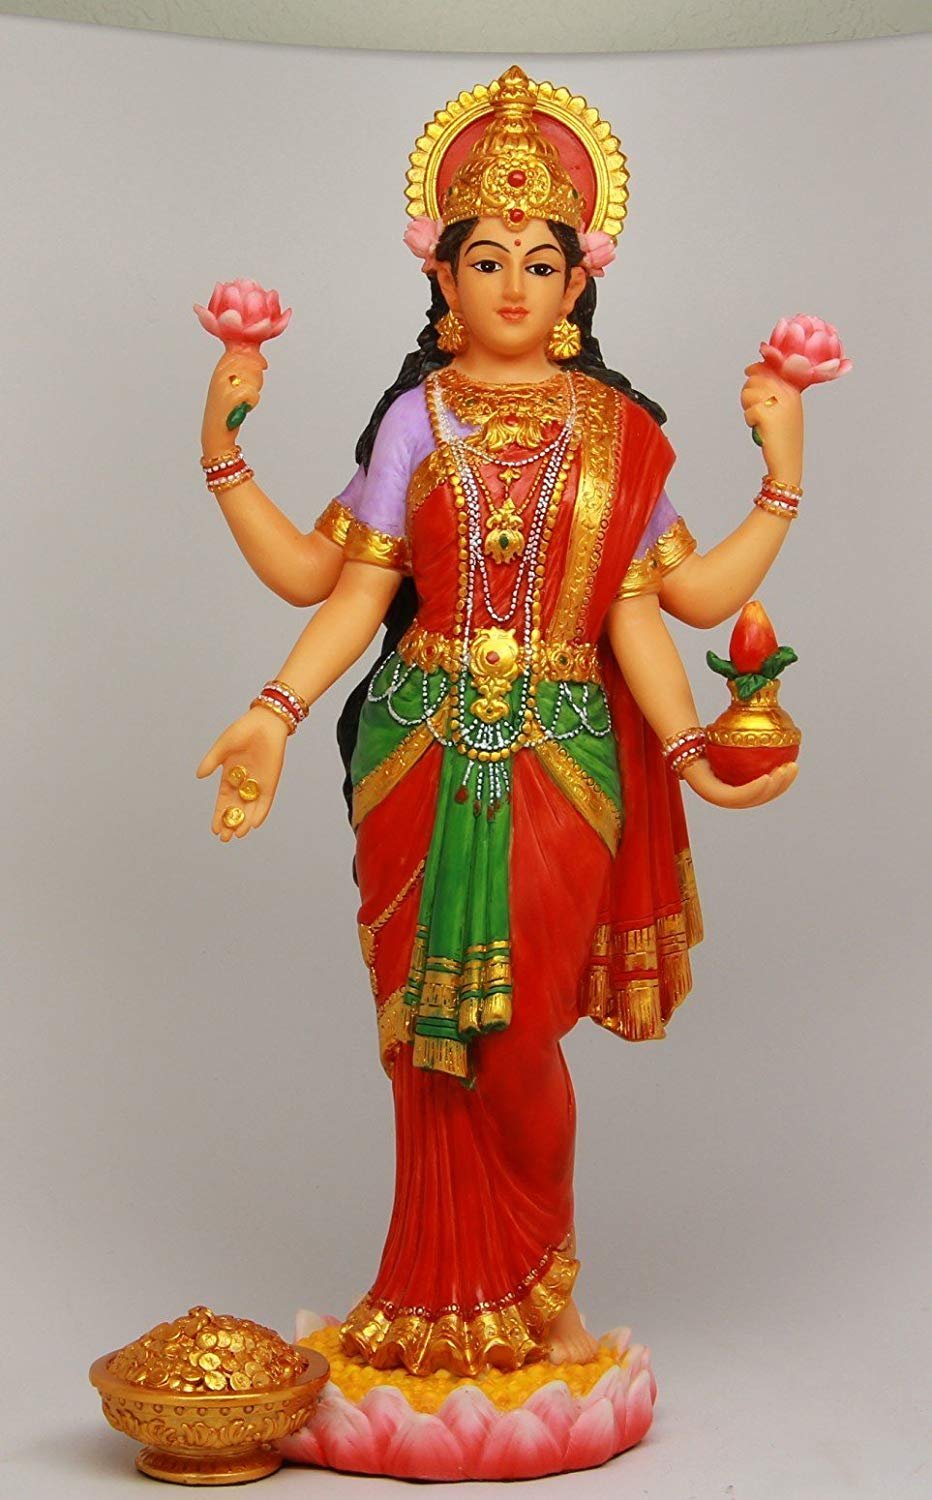 Hindu Hinduism Colorful Lakshmi Goddess Of Wealth Prosperity Statue Figurine Deity Of Beauty